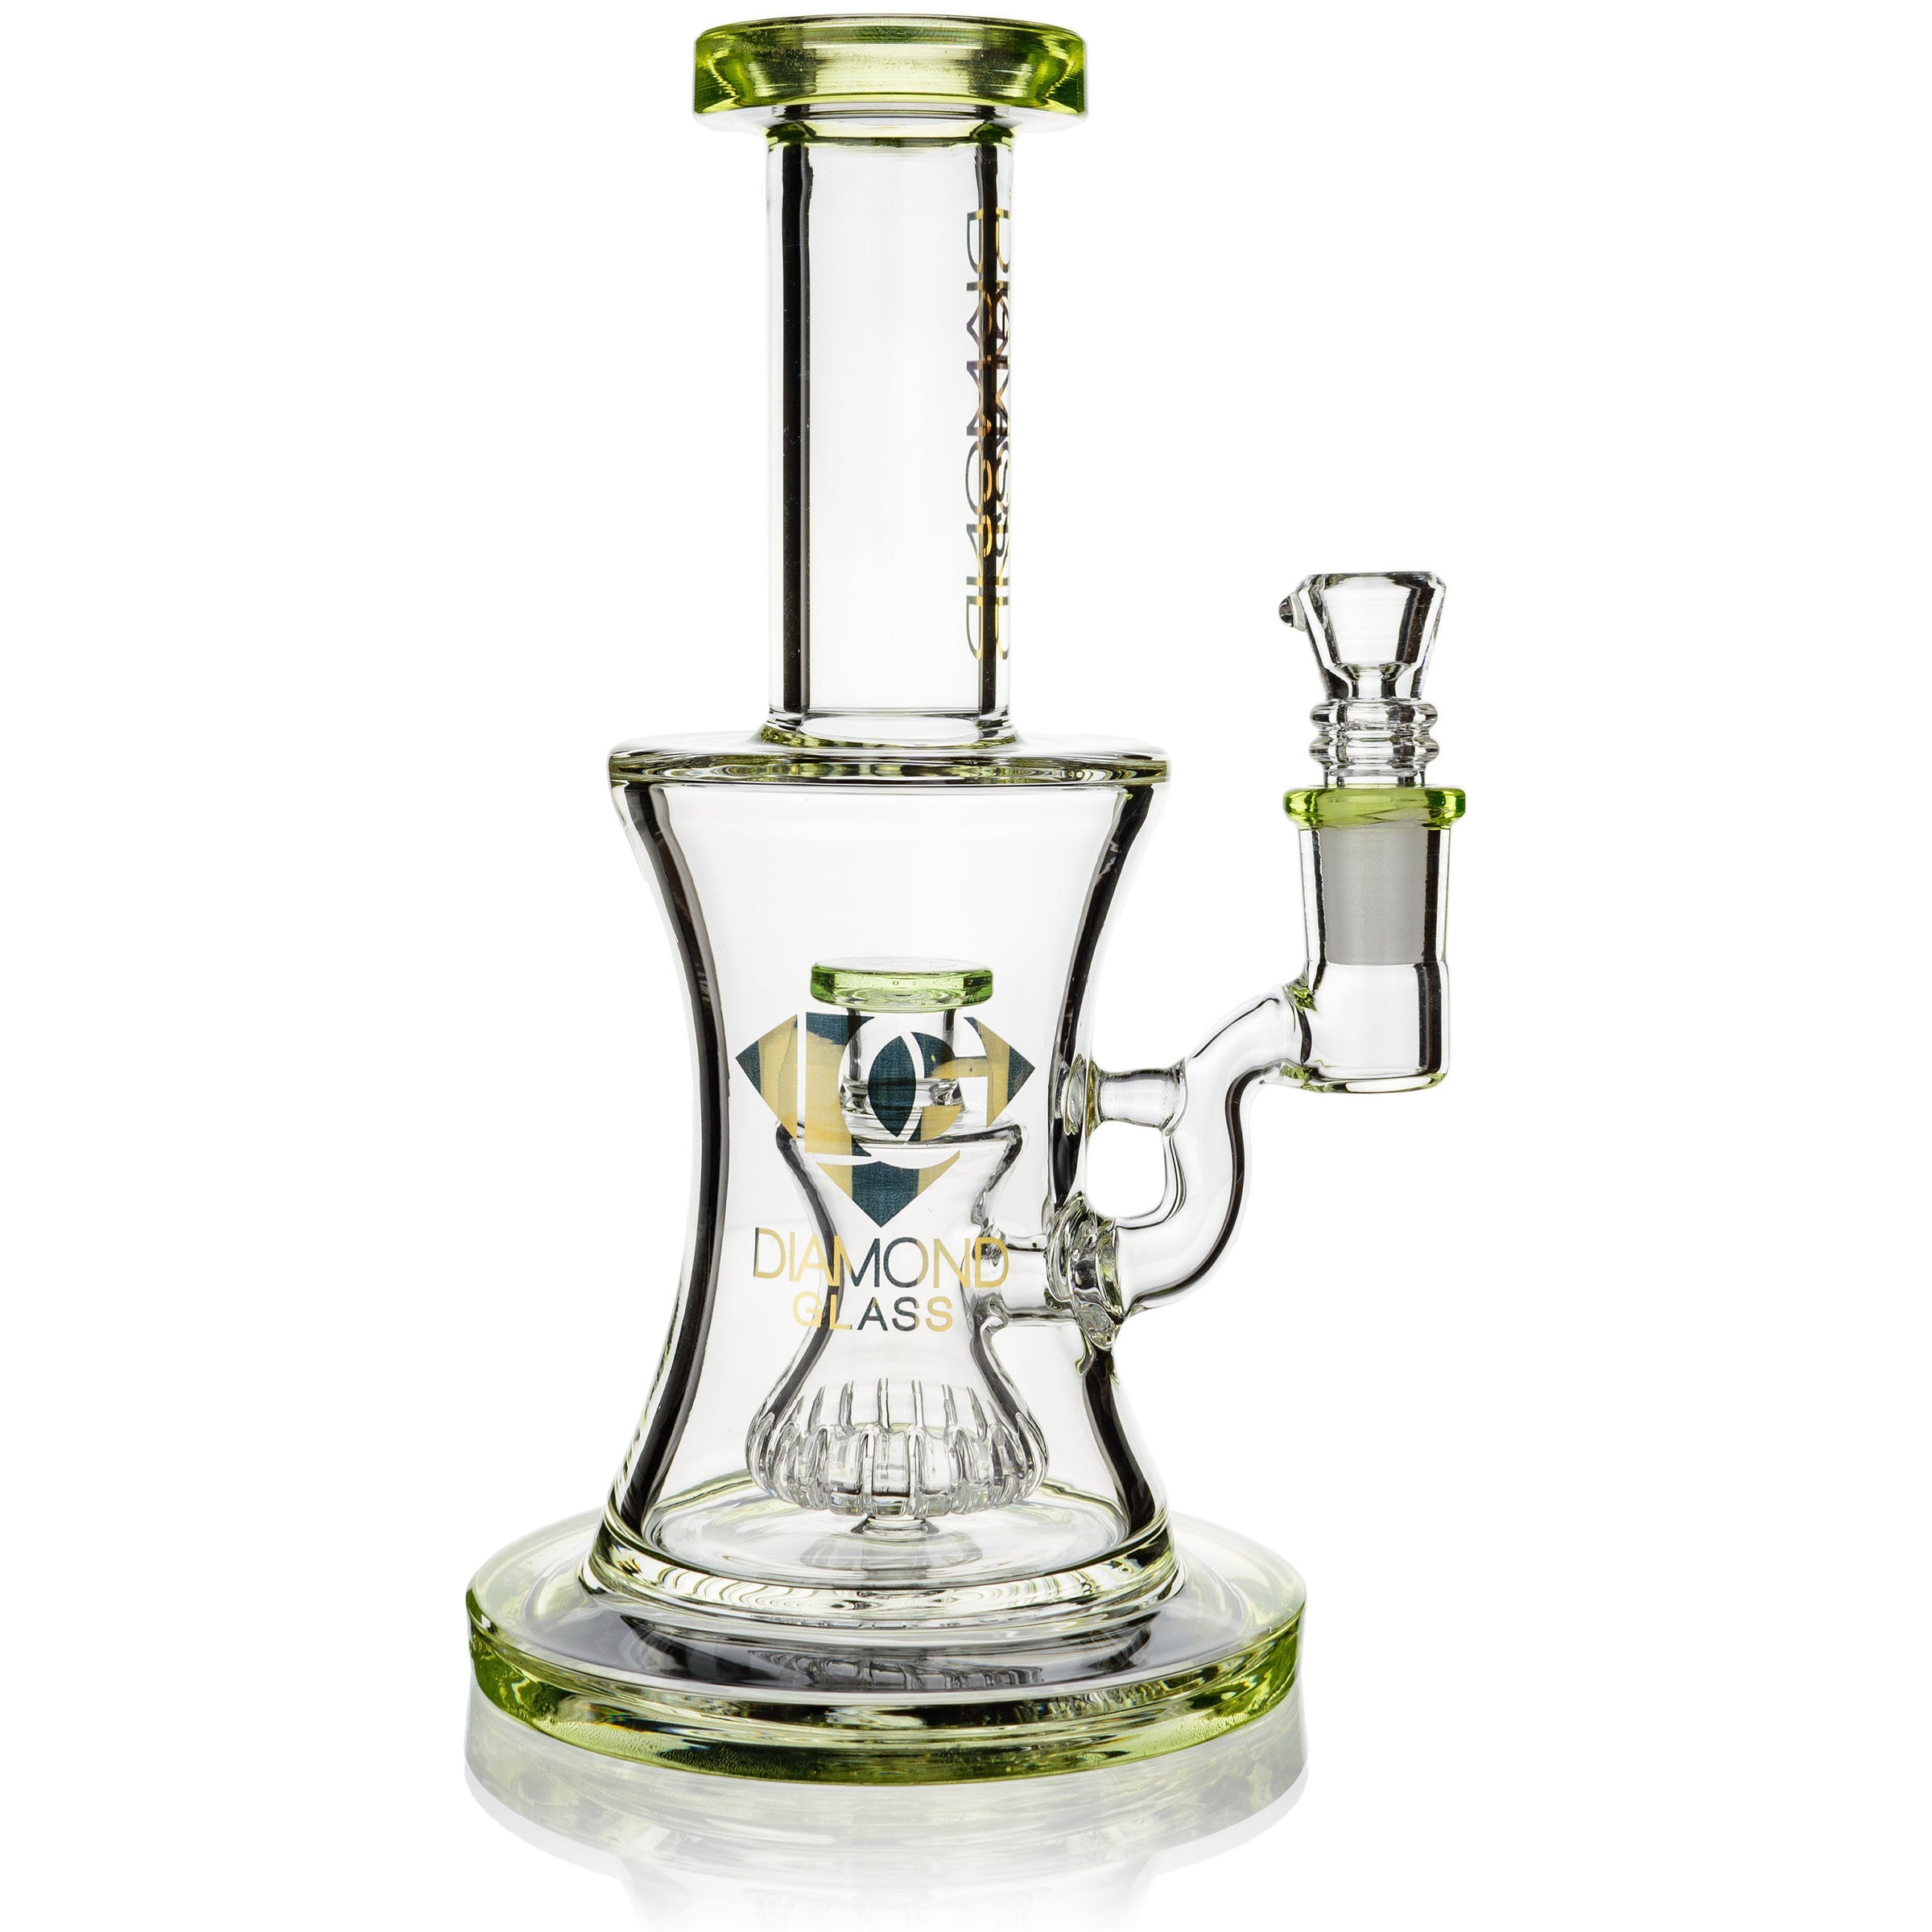 8" Hourglass Rig w/ Showerhead Perc, by Diamond Glass (free banger included) - BKRY Inc.